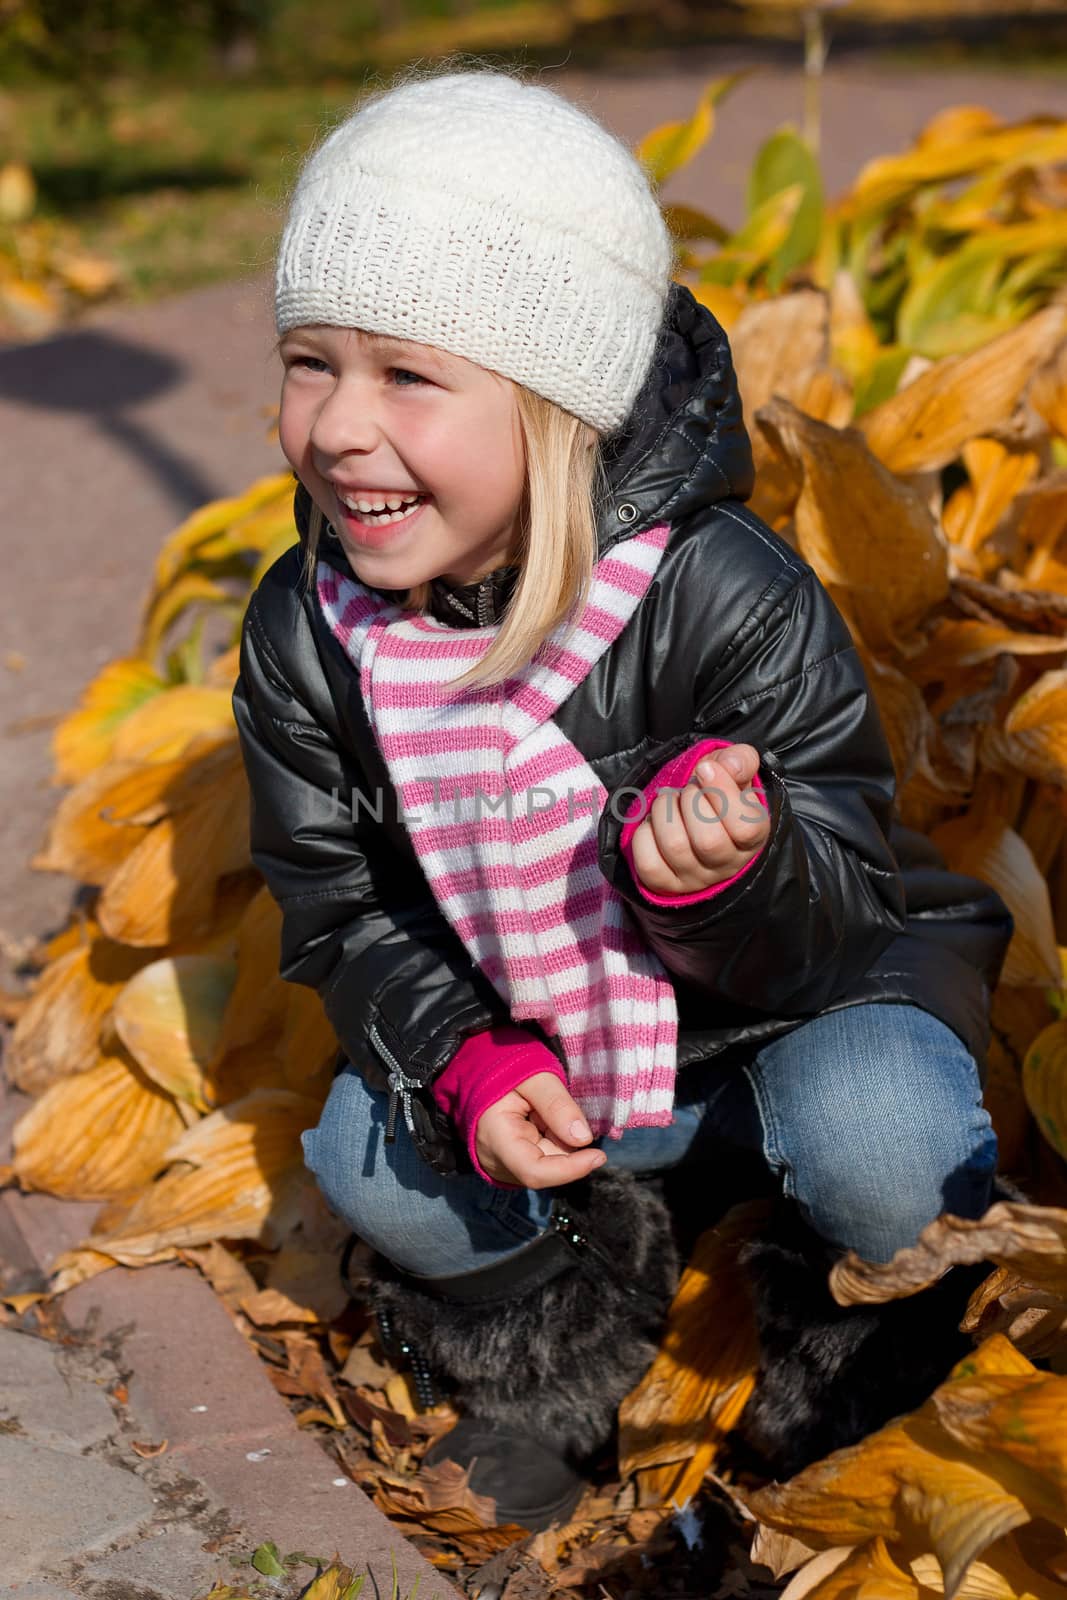 Cute girl in autumn park by victosha